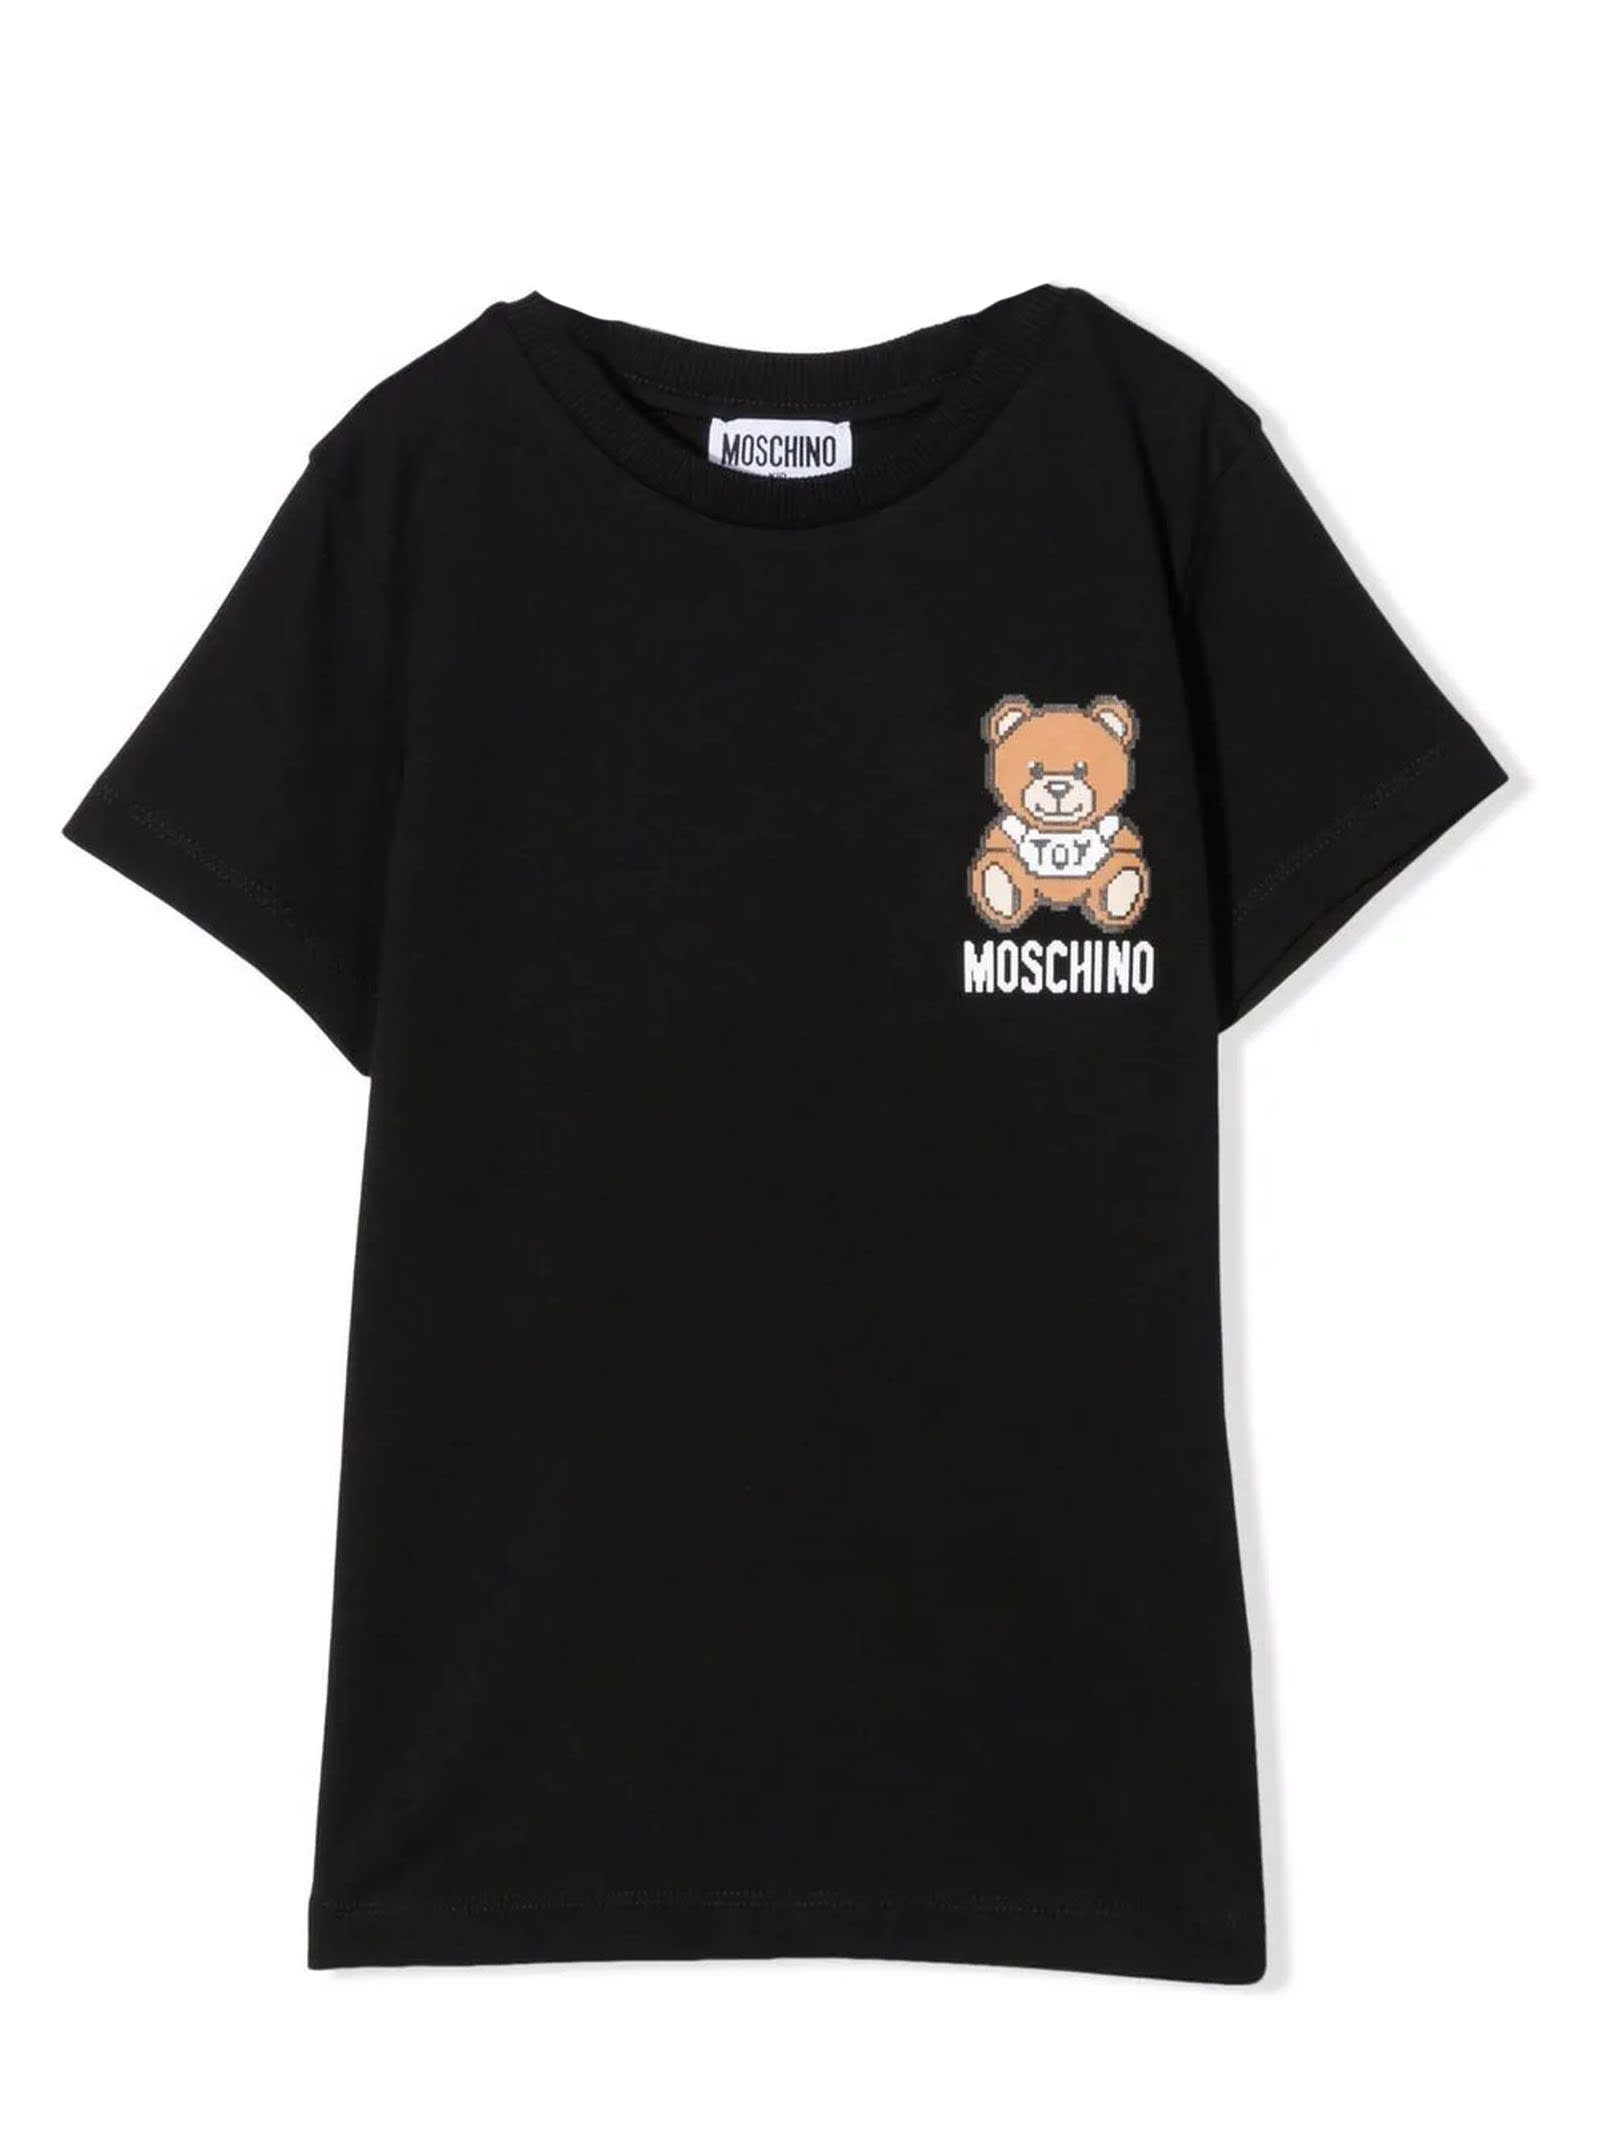 Moschino Black Cotton Tshirt